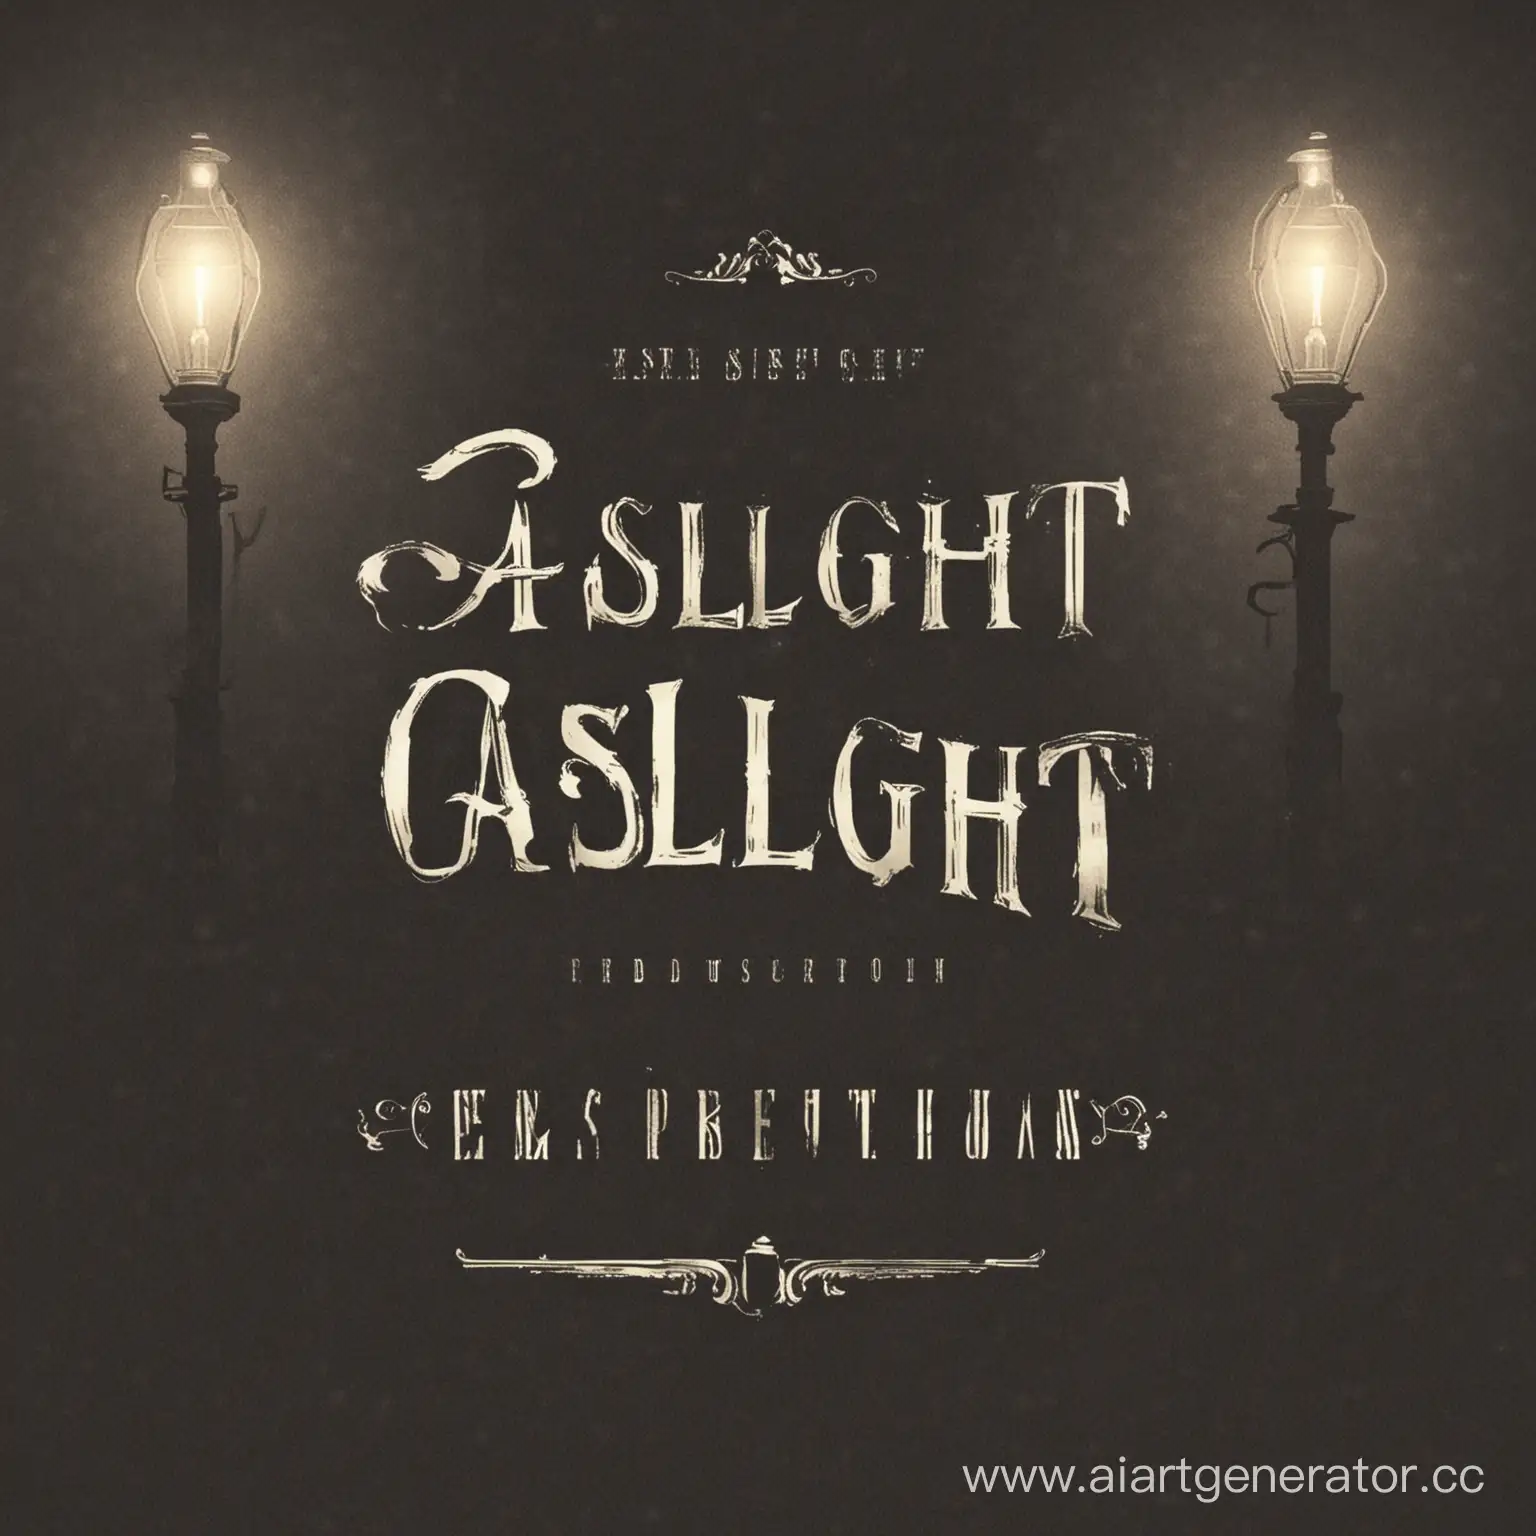 Vintage-Gaslight-Production-in-Victorian-Era-Setting